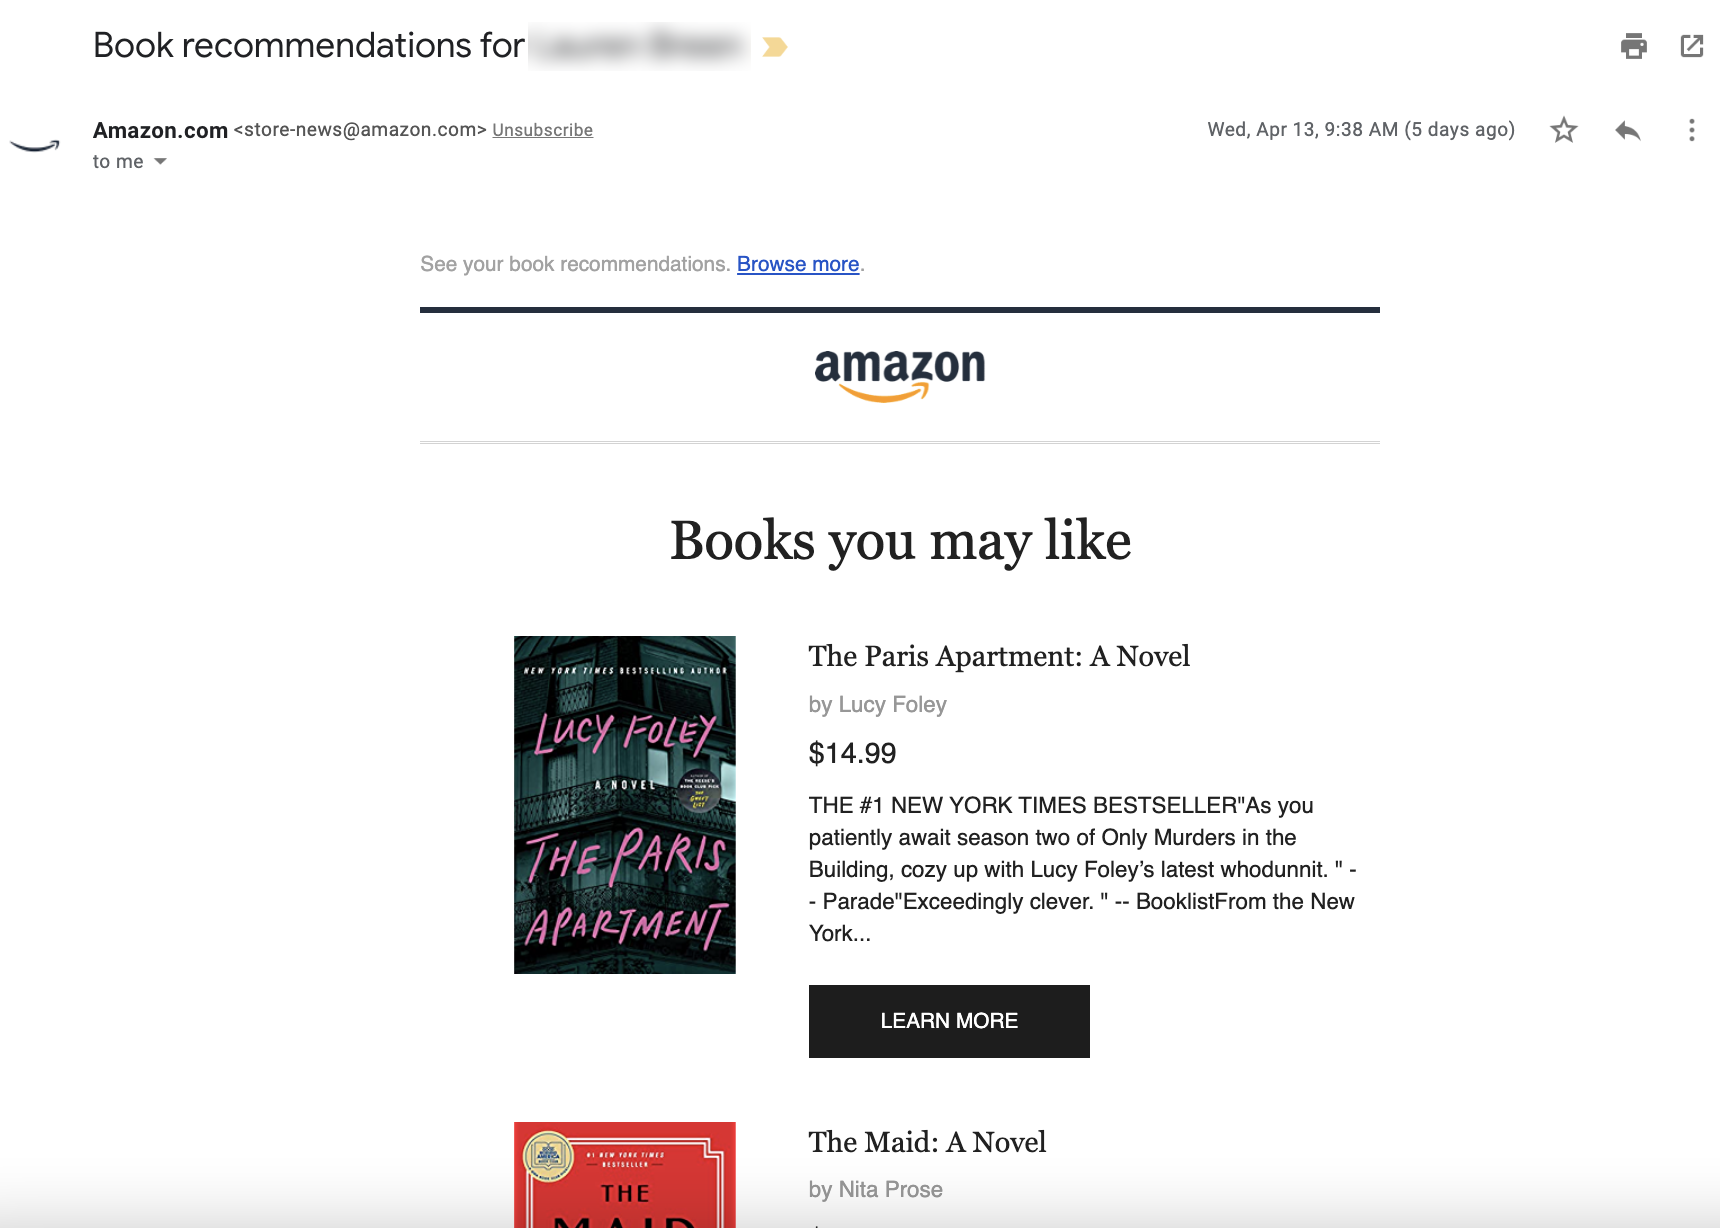 Amazon retargeting upsell email example